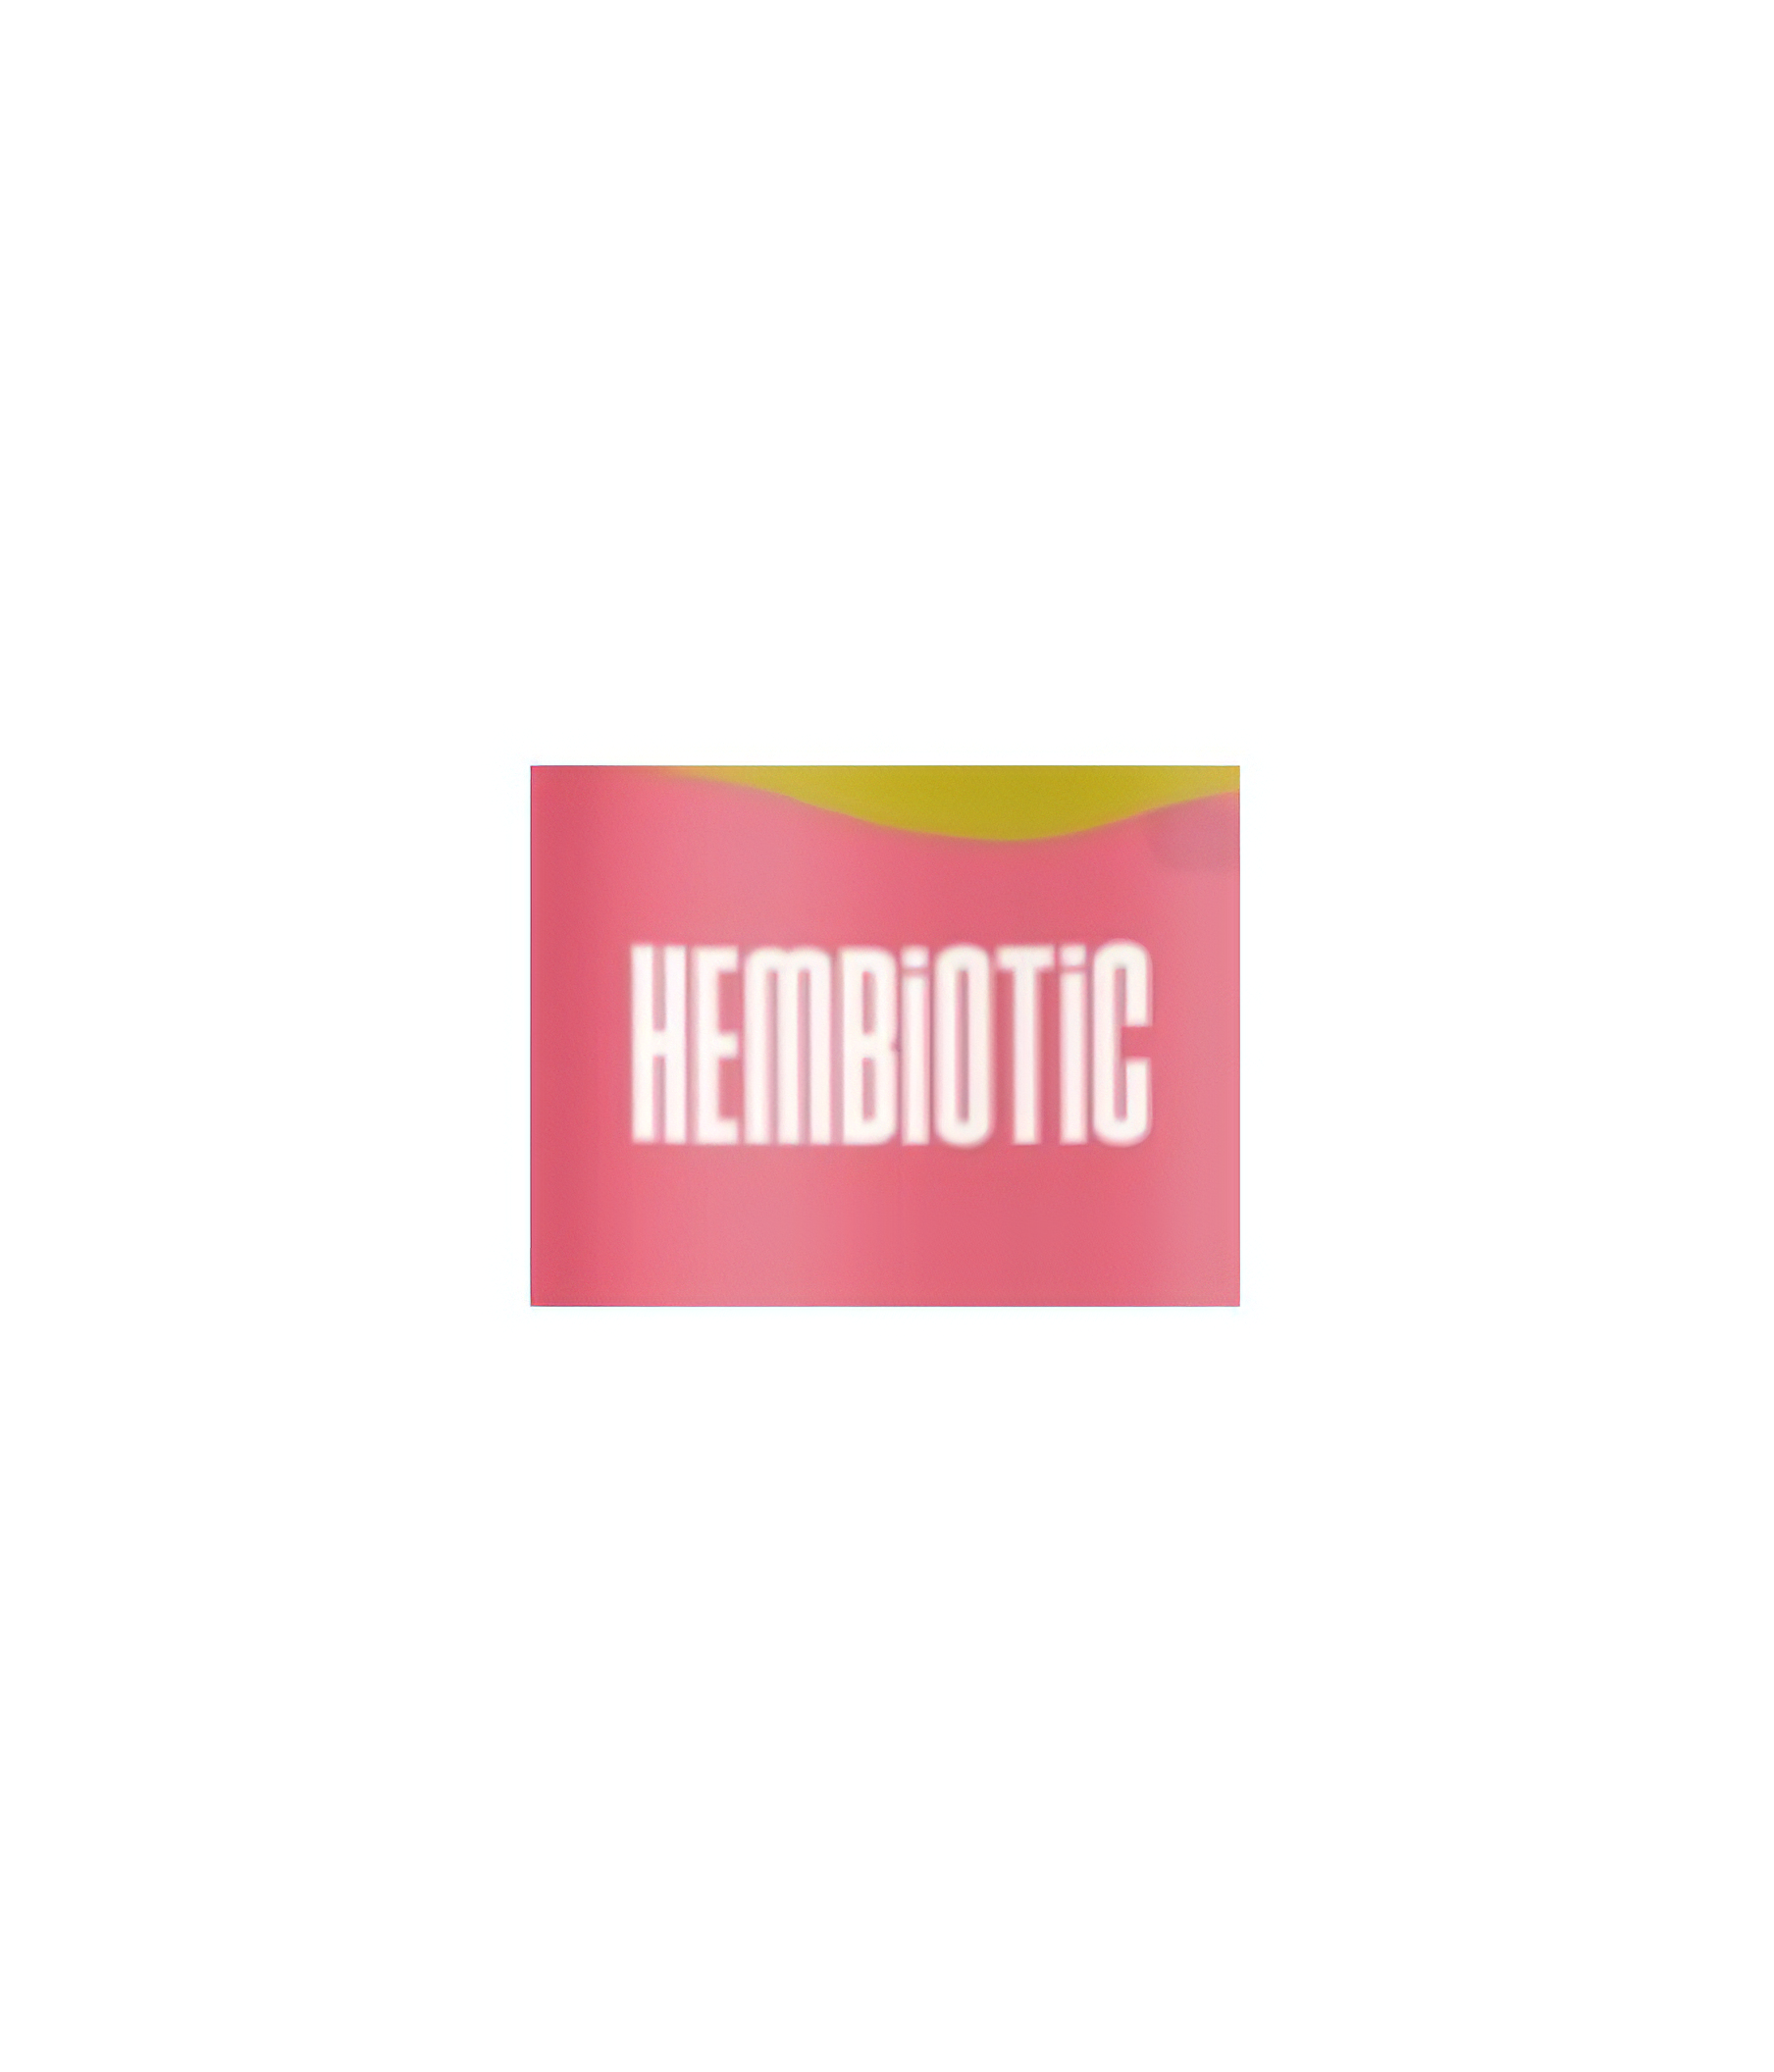 Hembiotic